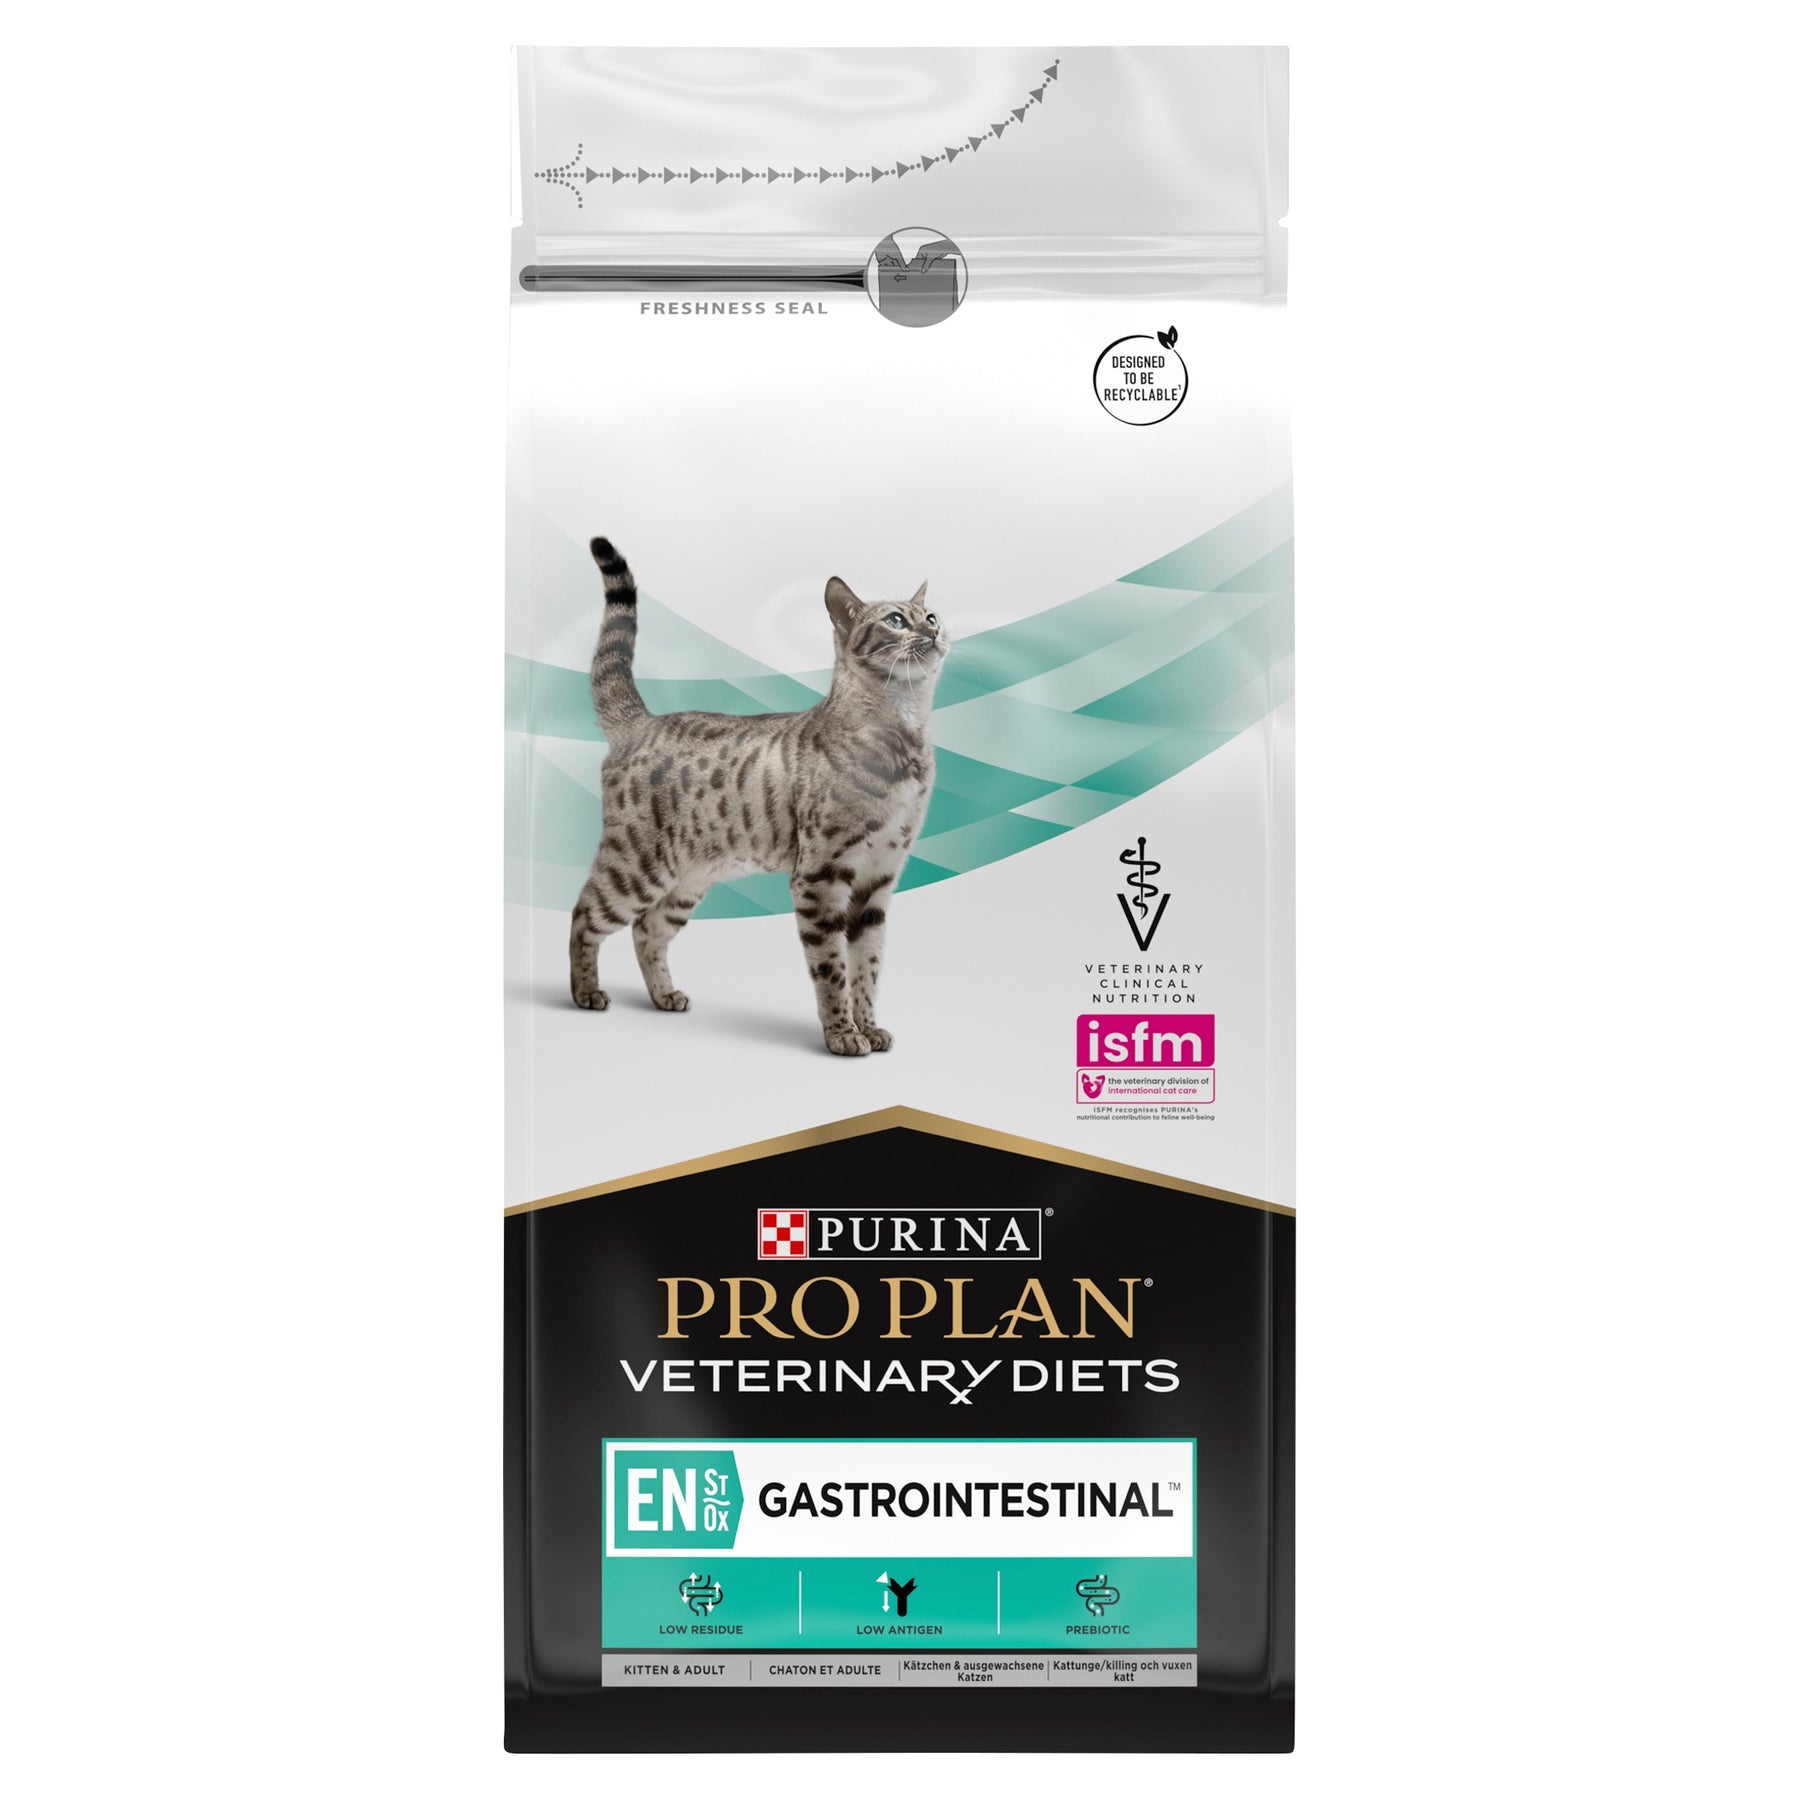 PURINA® PRO PLAN® Veterinary Diets - Feline EN ST/OX Gastrointestinal